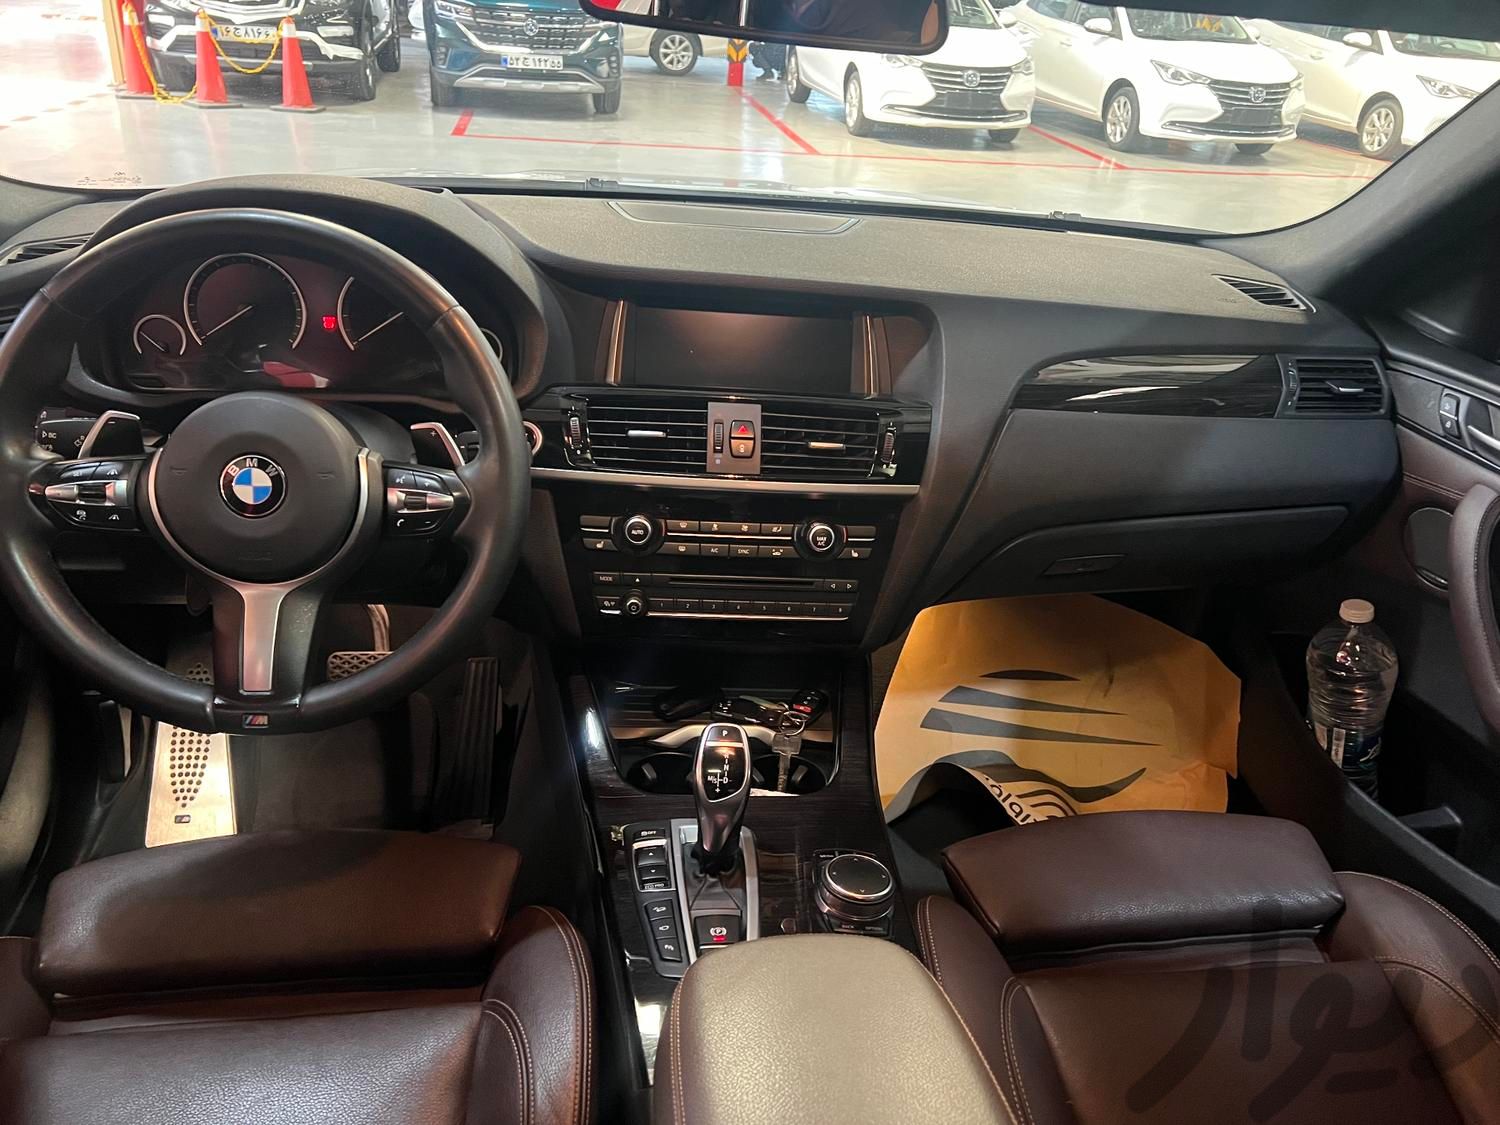 BMW مدل ۲۰۱۷ x4